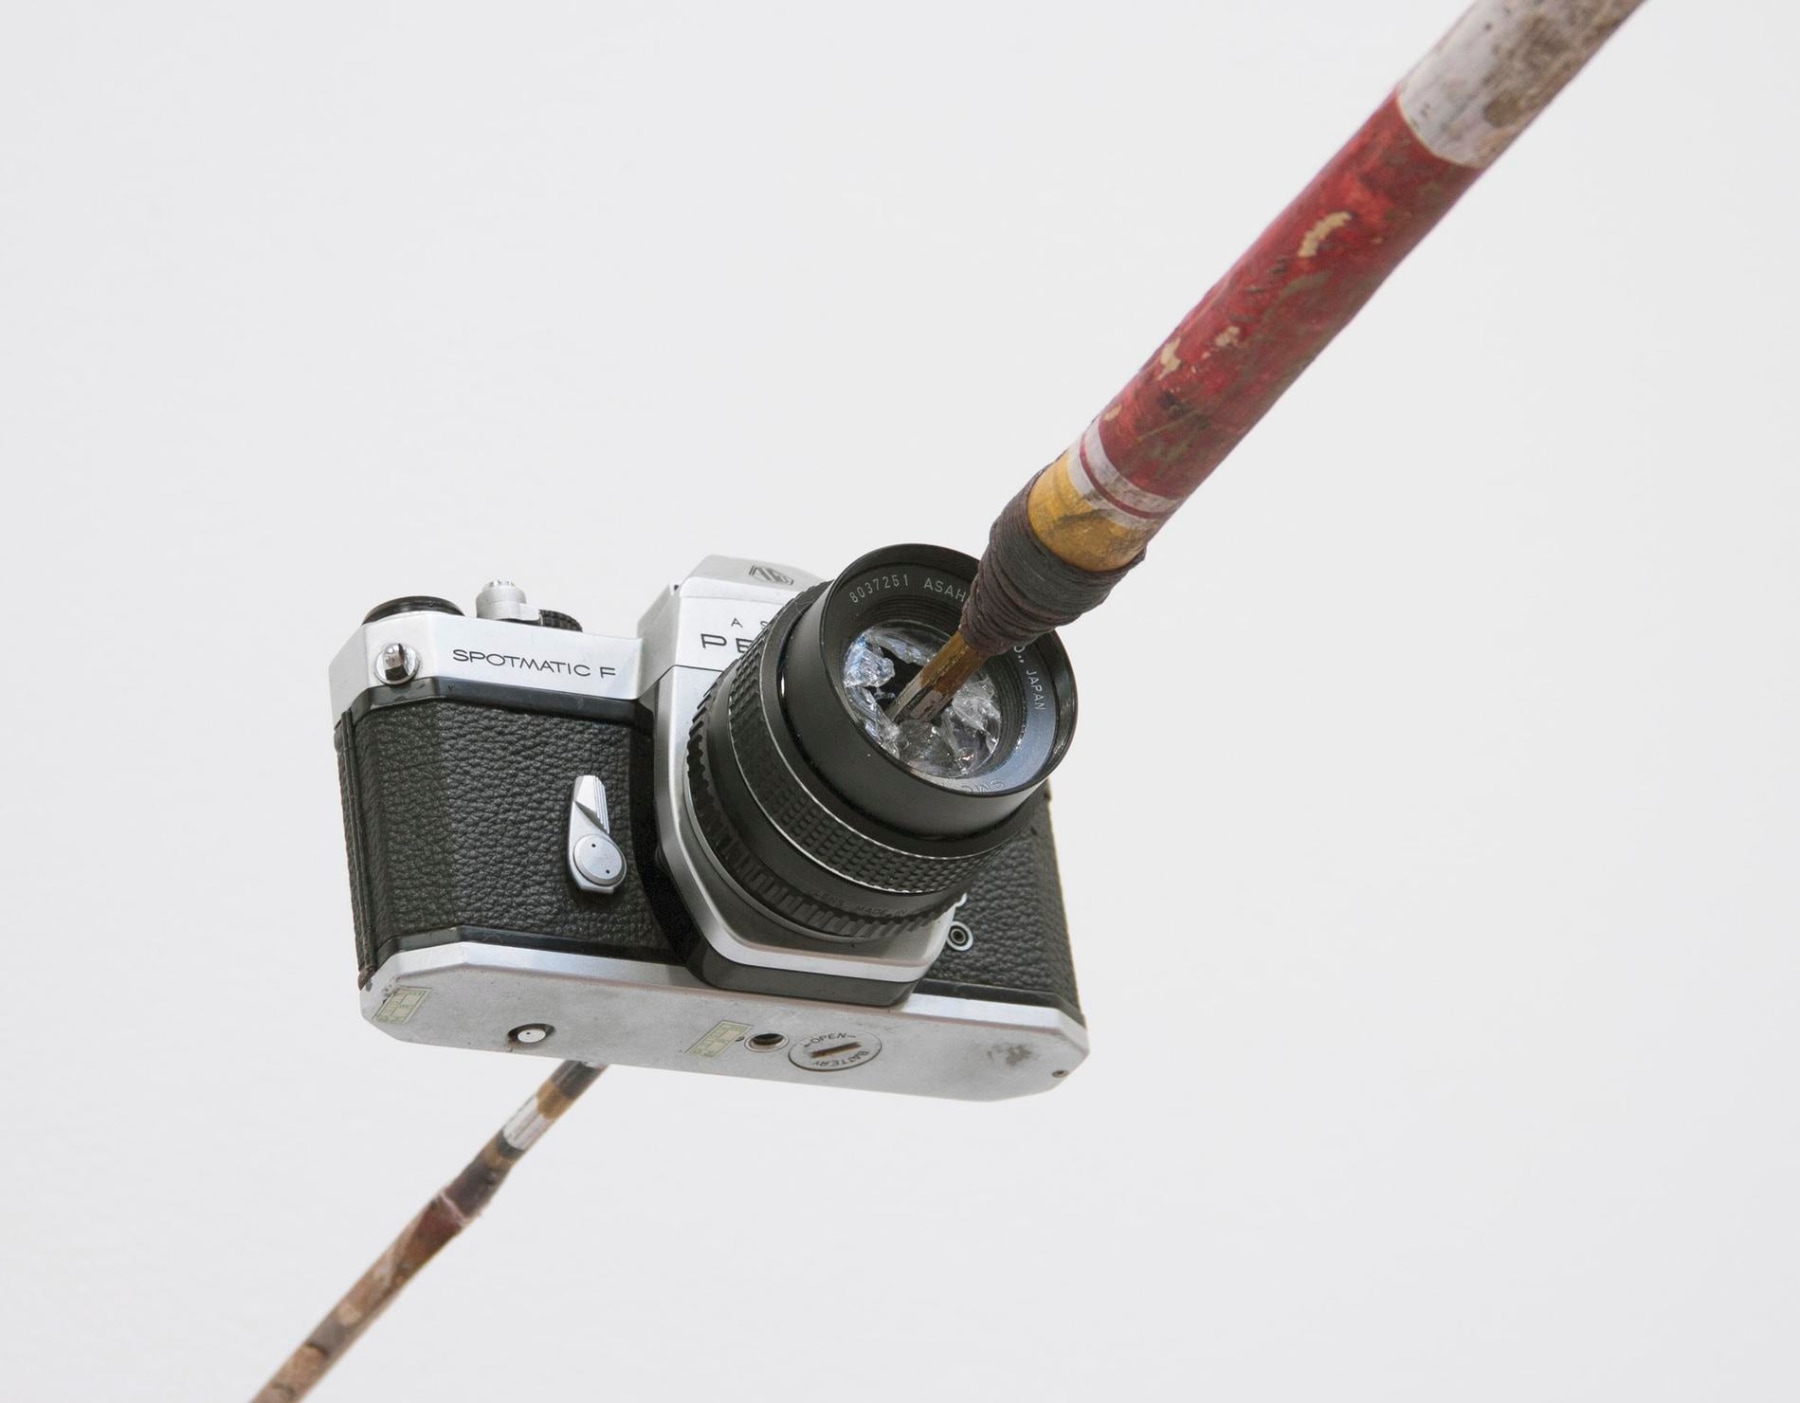 An aboriginal spear piercing the lens of a camera